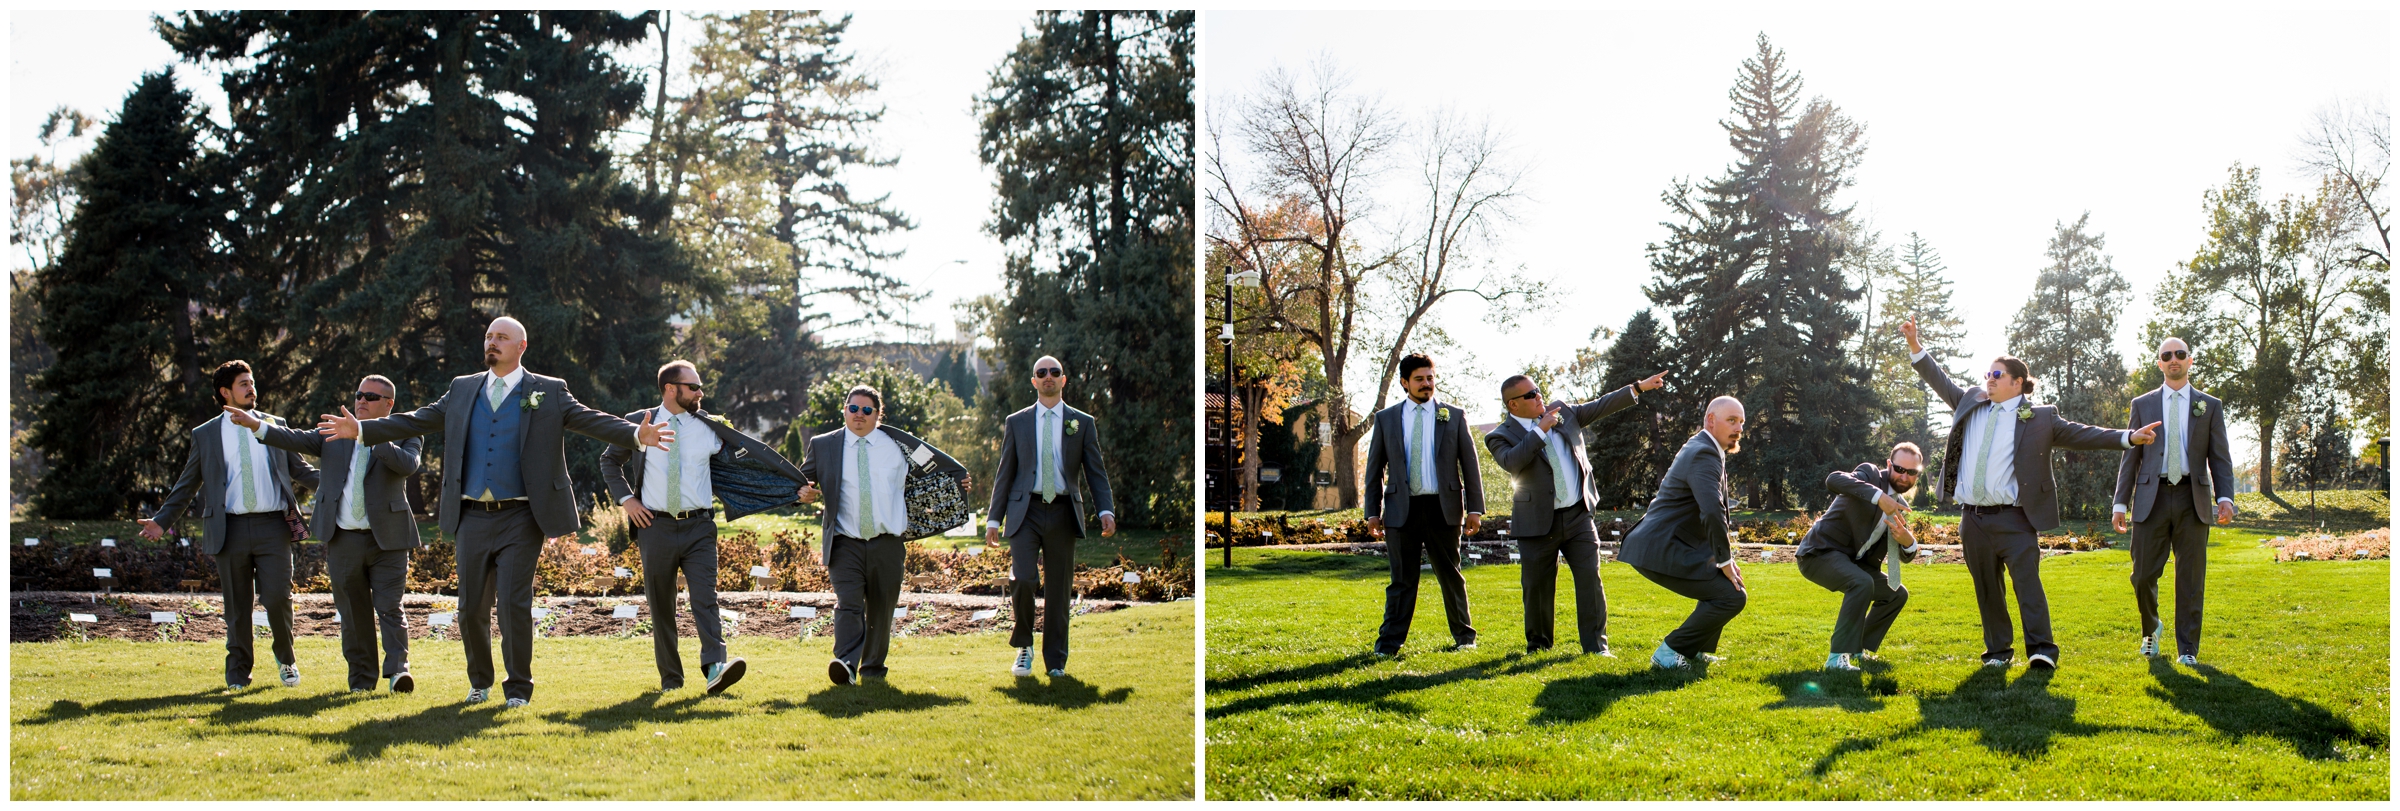 groomsmen walking through field at CSU trial gardens 